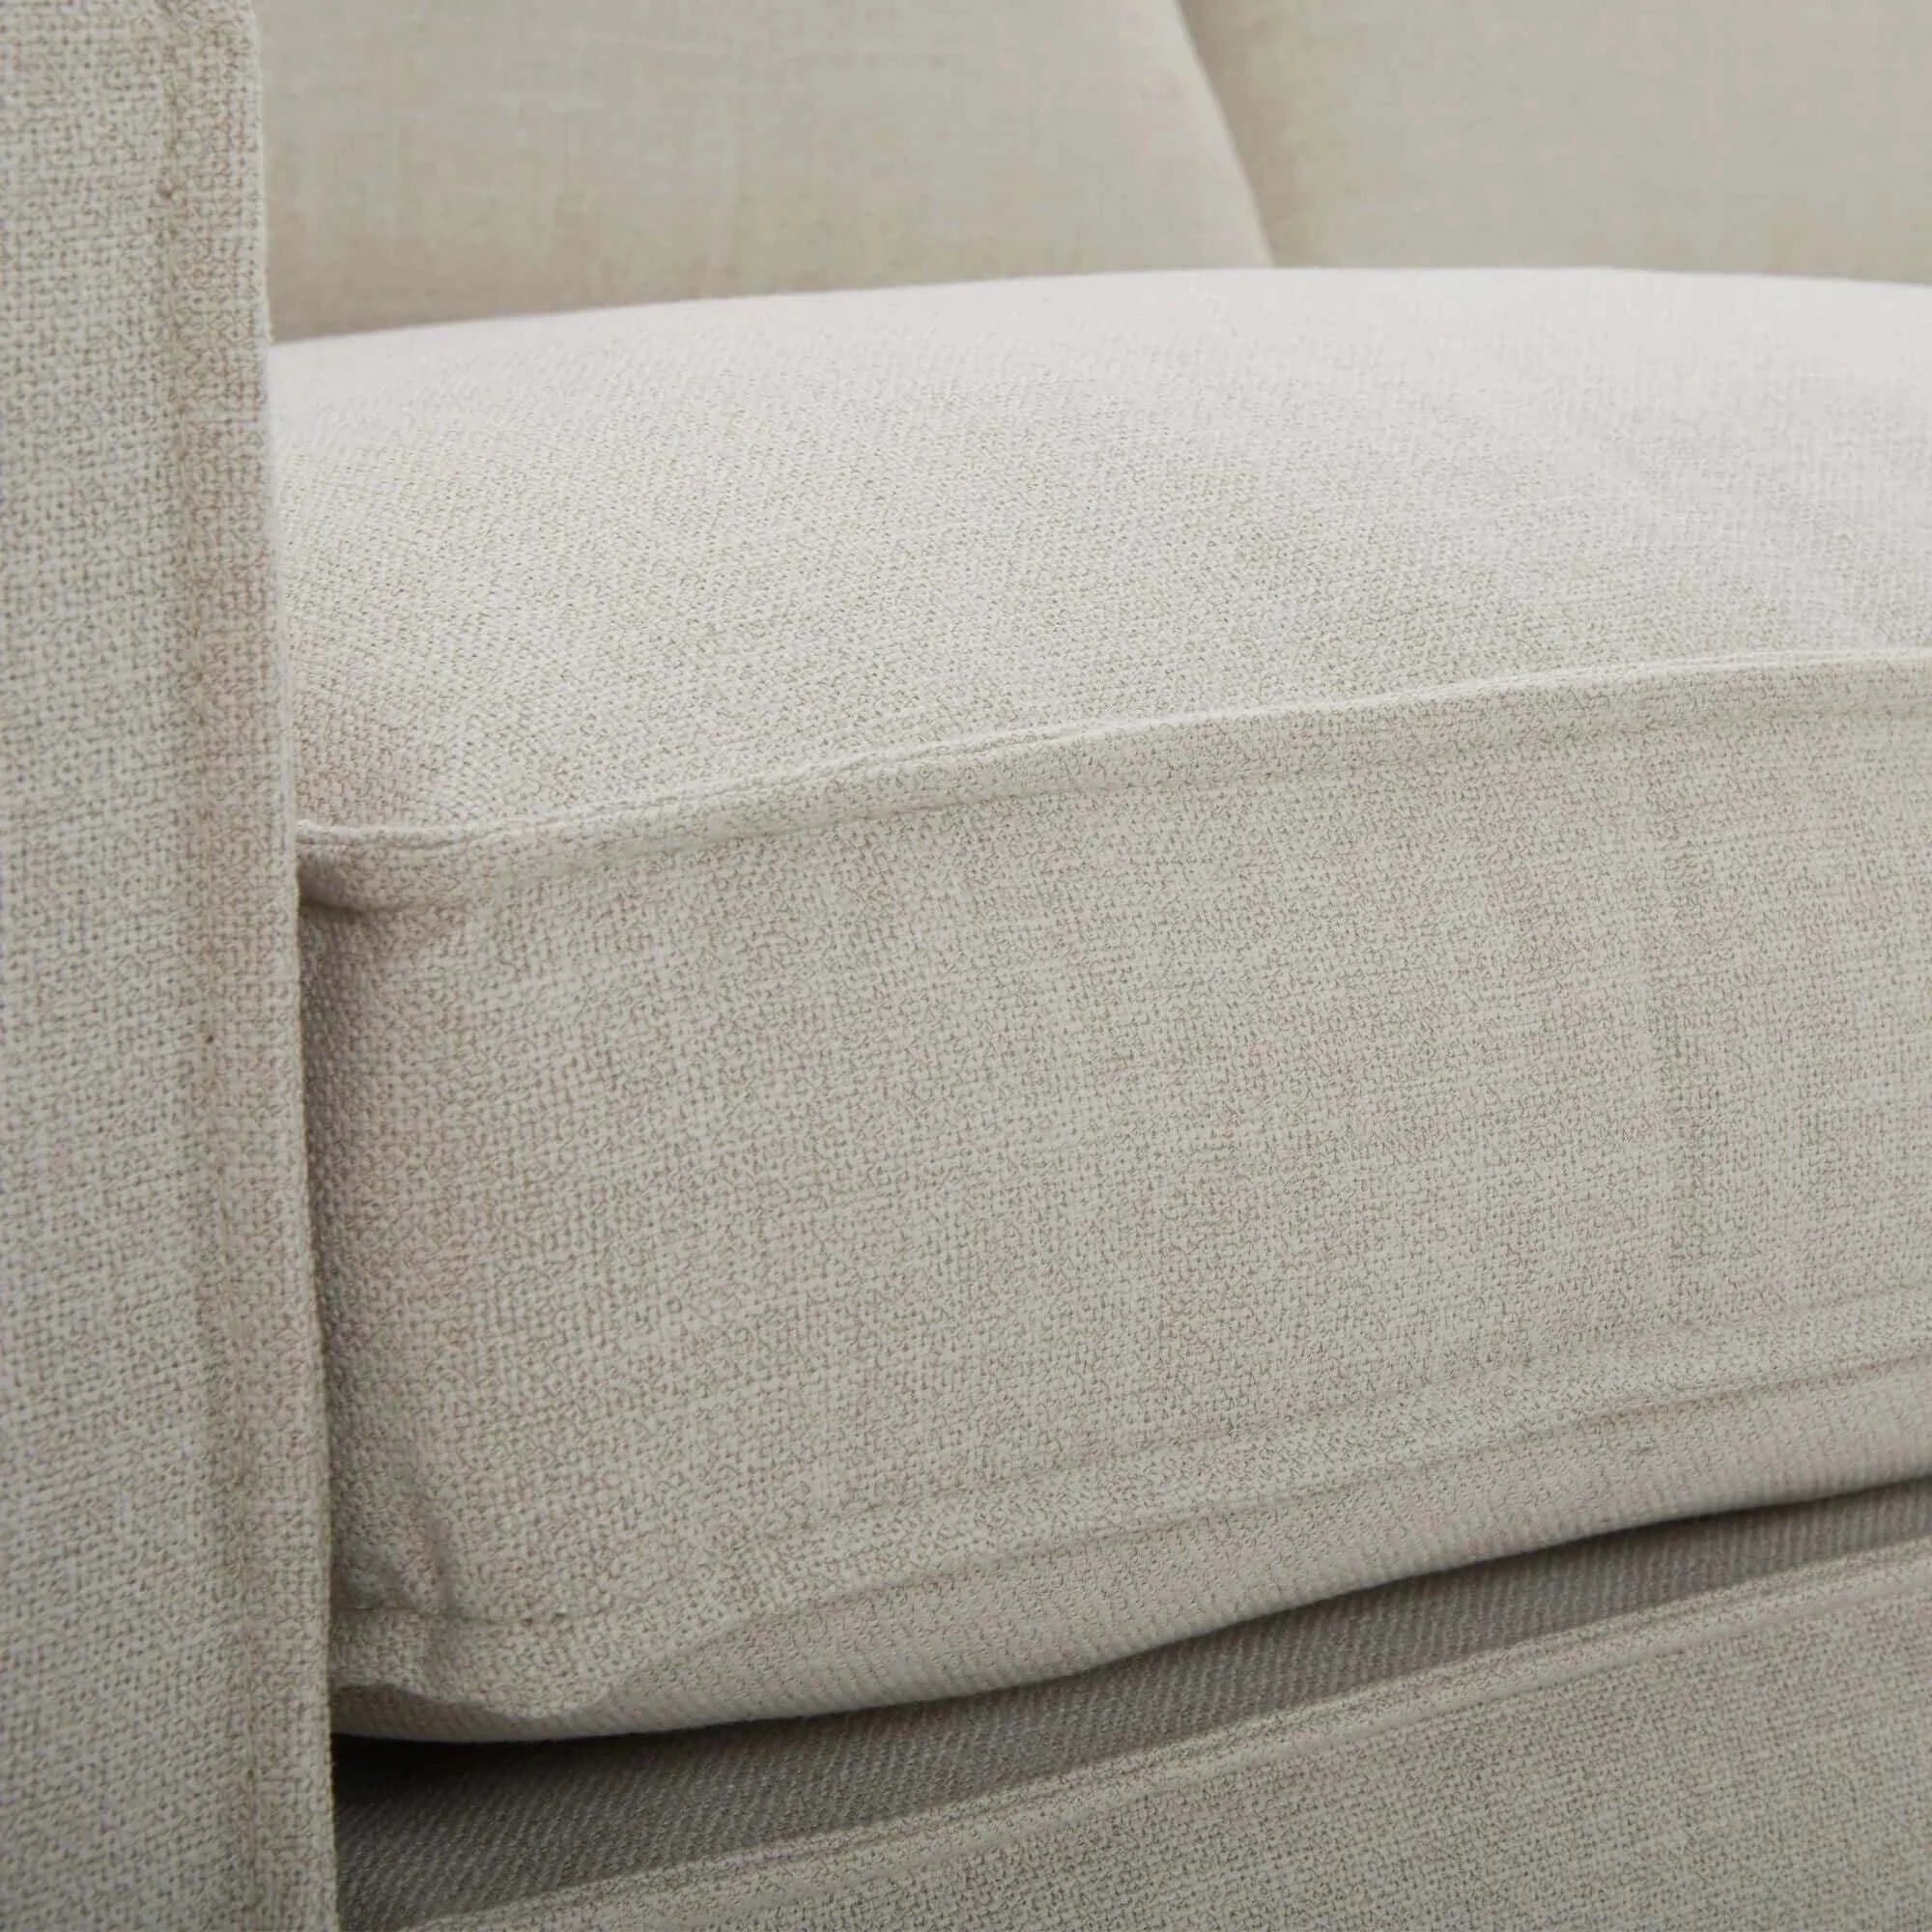 Buy plushy 2 + 3 seater sofa set fabric uplholstered lounge couch - stone - upinteriors-Upinteriors